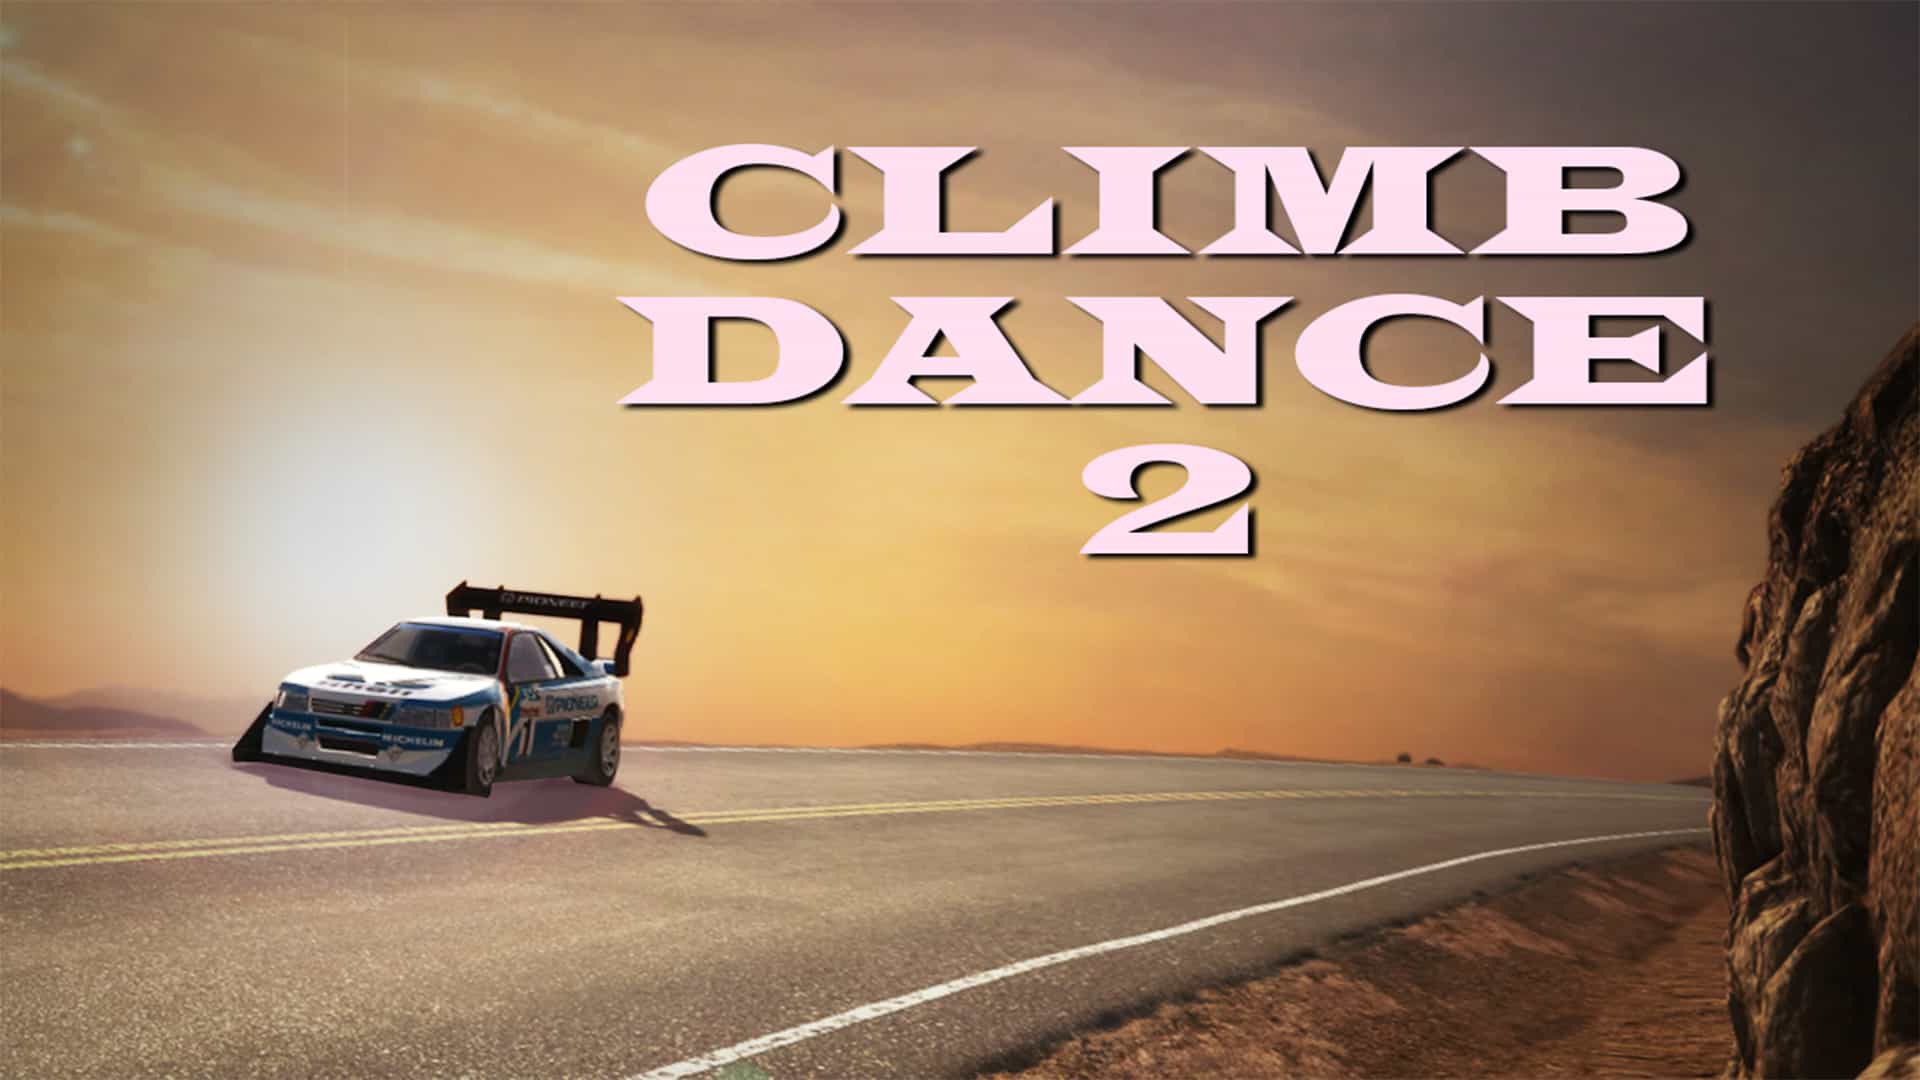 WATCH: Climb Dance 2 - challenging Dave Cam